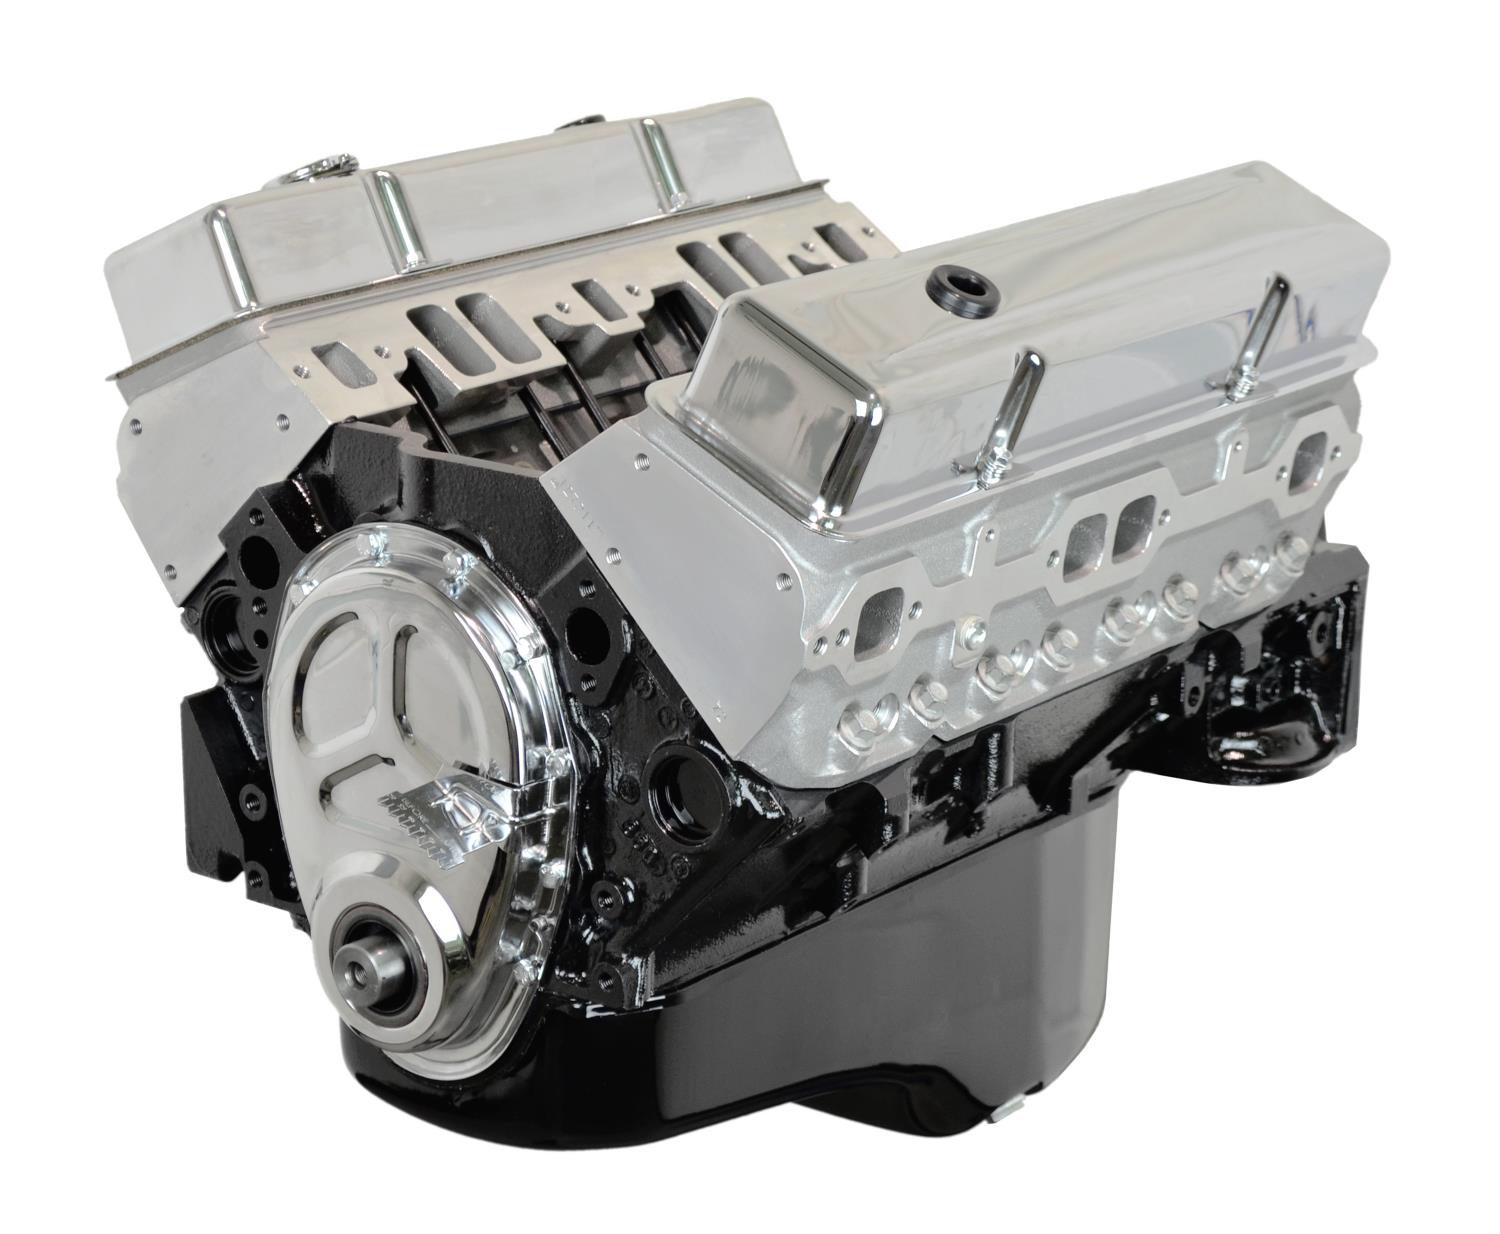 HP96 High Performance Marine Crate Engine Small Block Chevy 383ci / 380HP / 445TQ